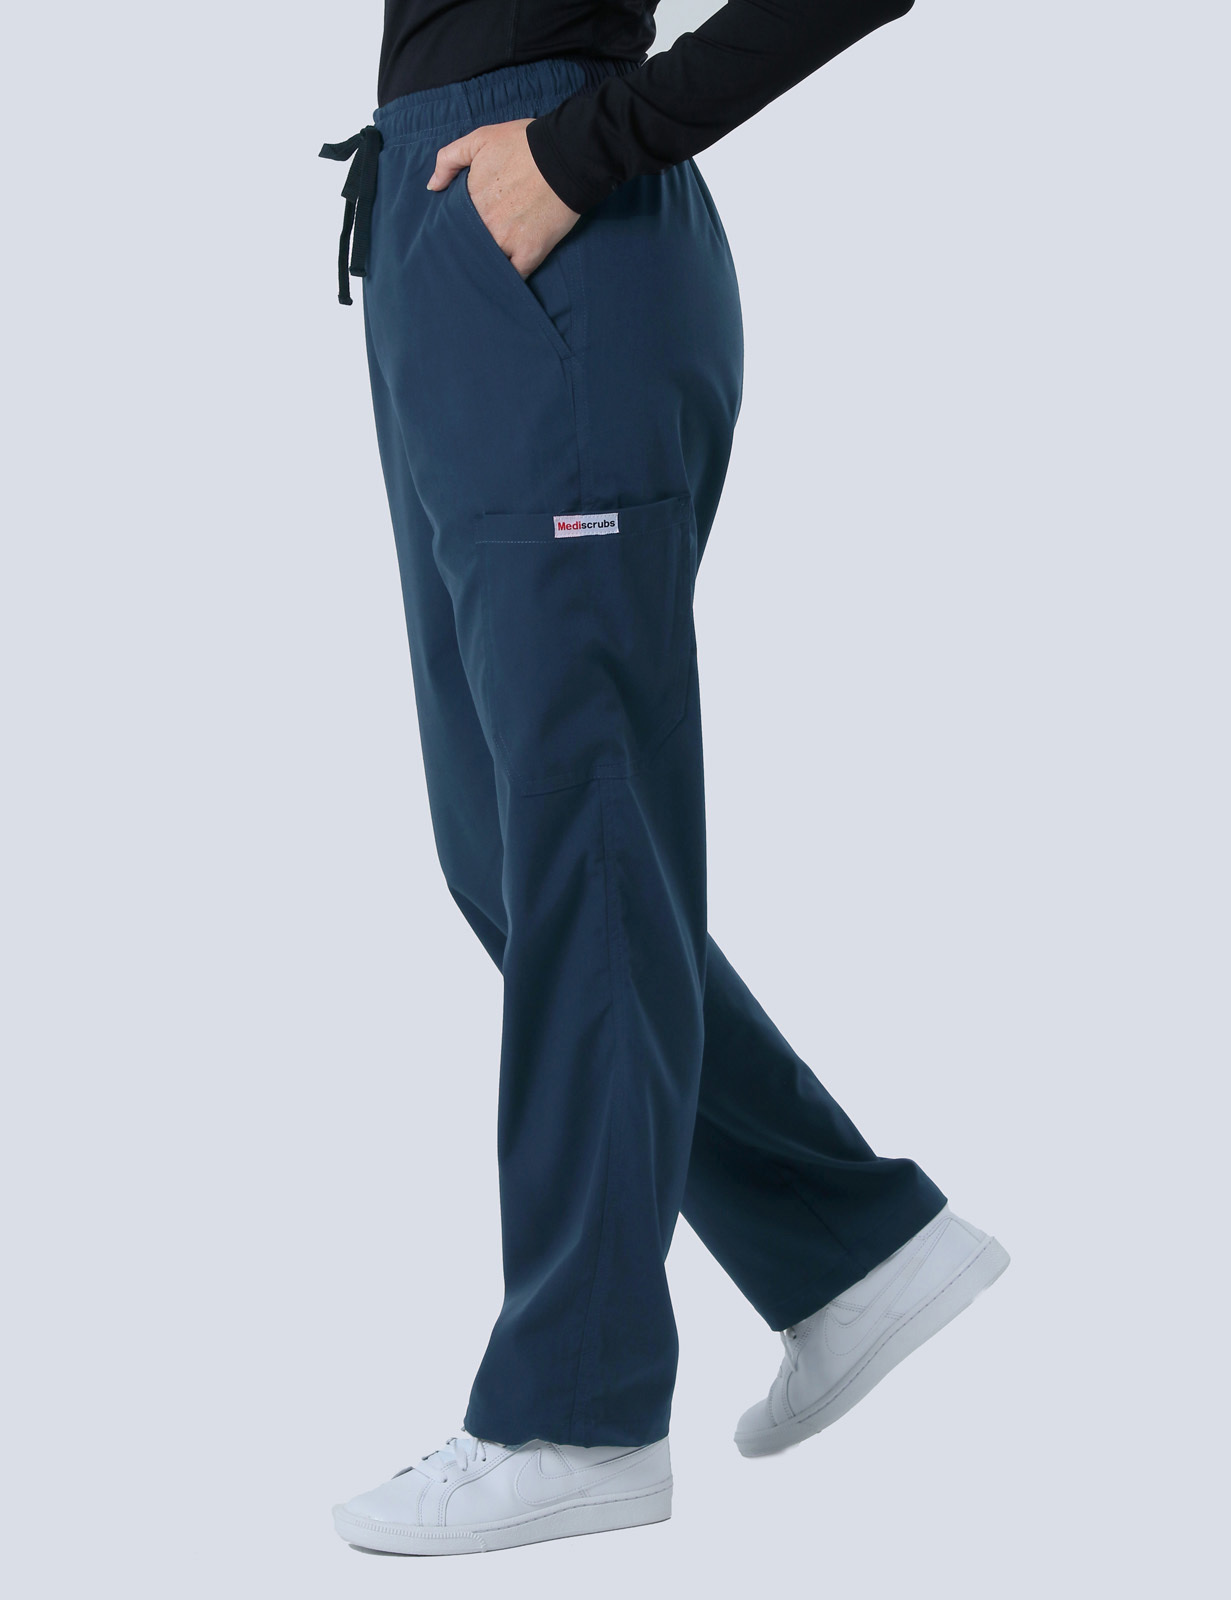 Regional Queensland Enrolled Nurse Uniform Set Bundle (4 Pocket Top and Cargo Pants in Navy incl Logos)